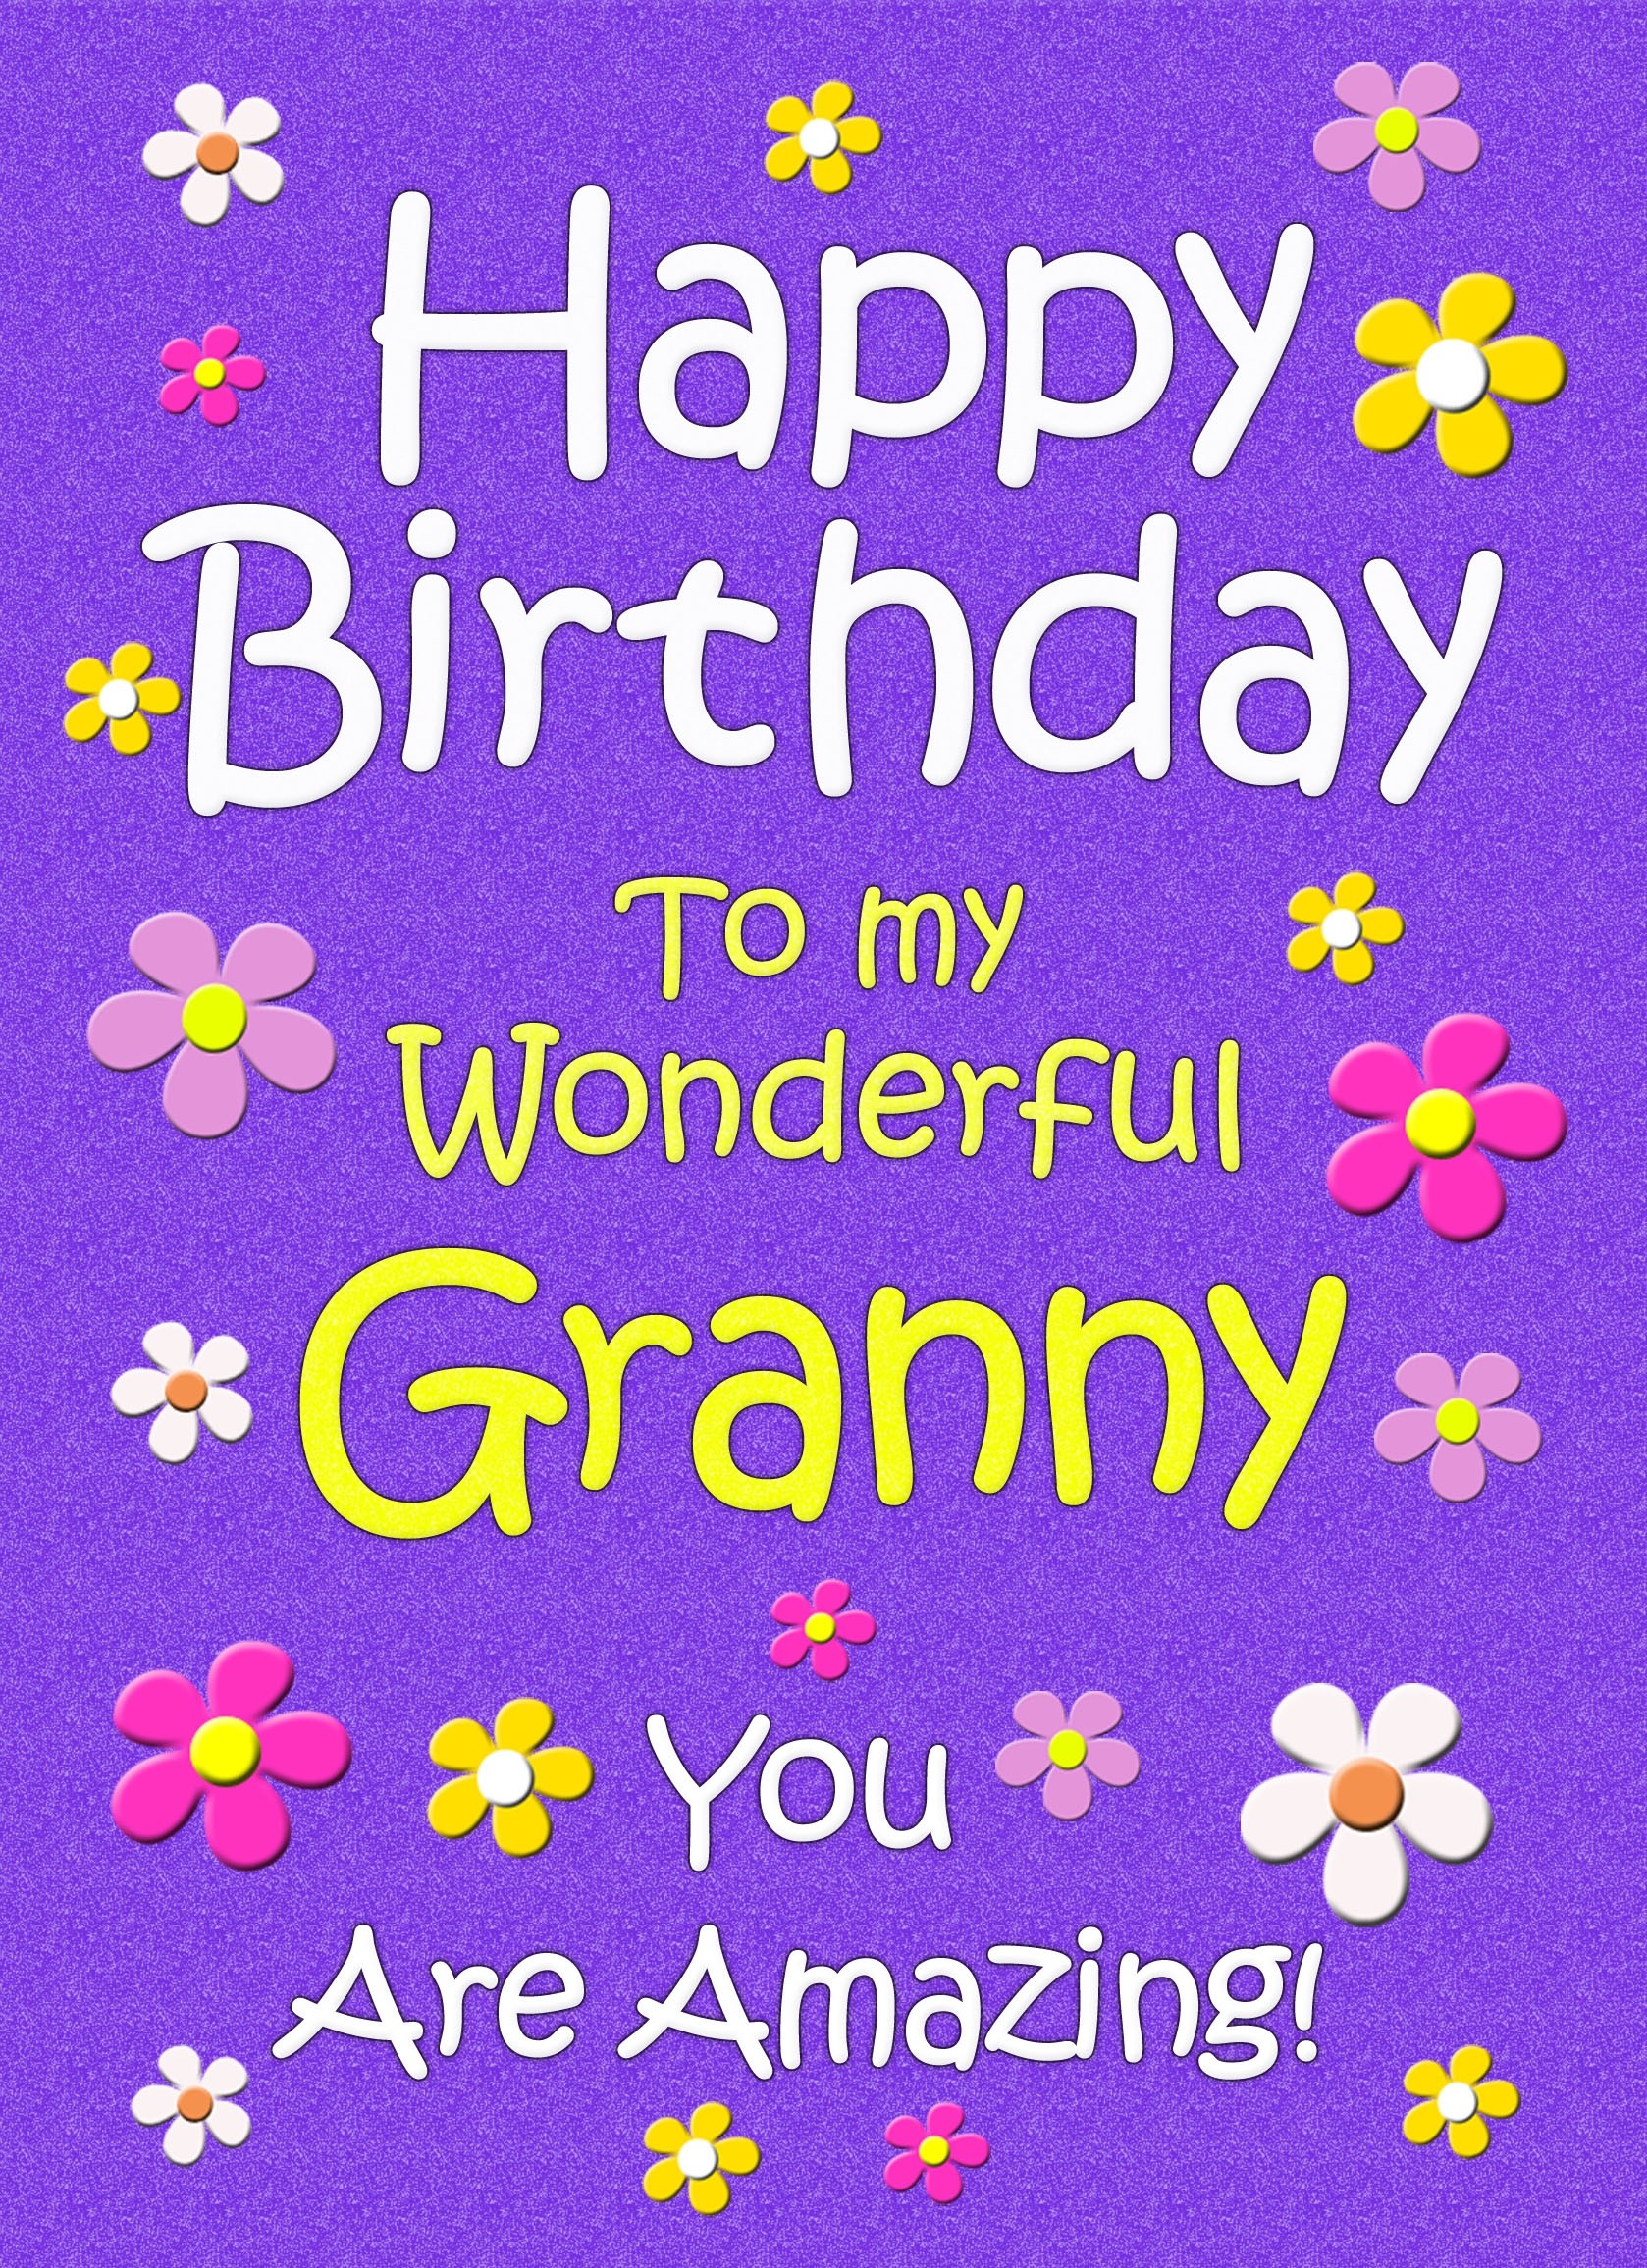 Granny Birthday Card (Purple)